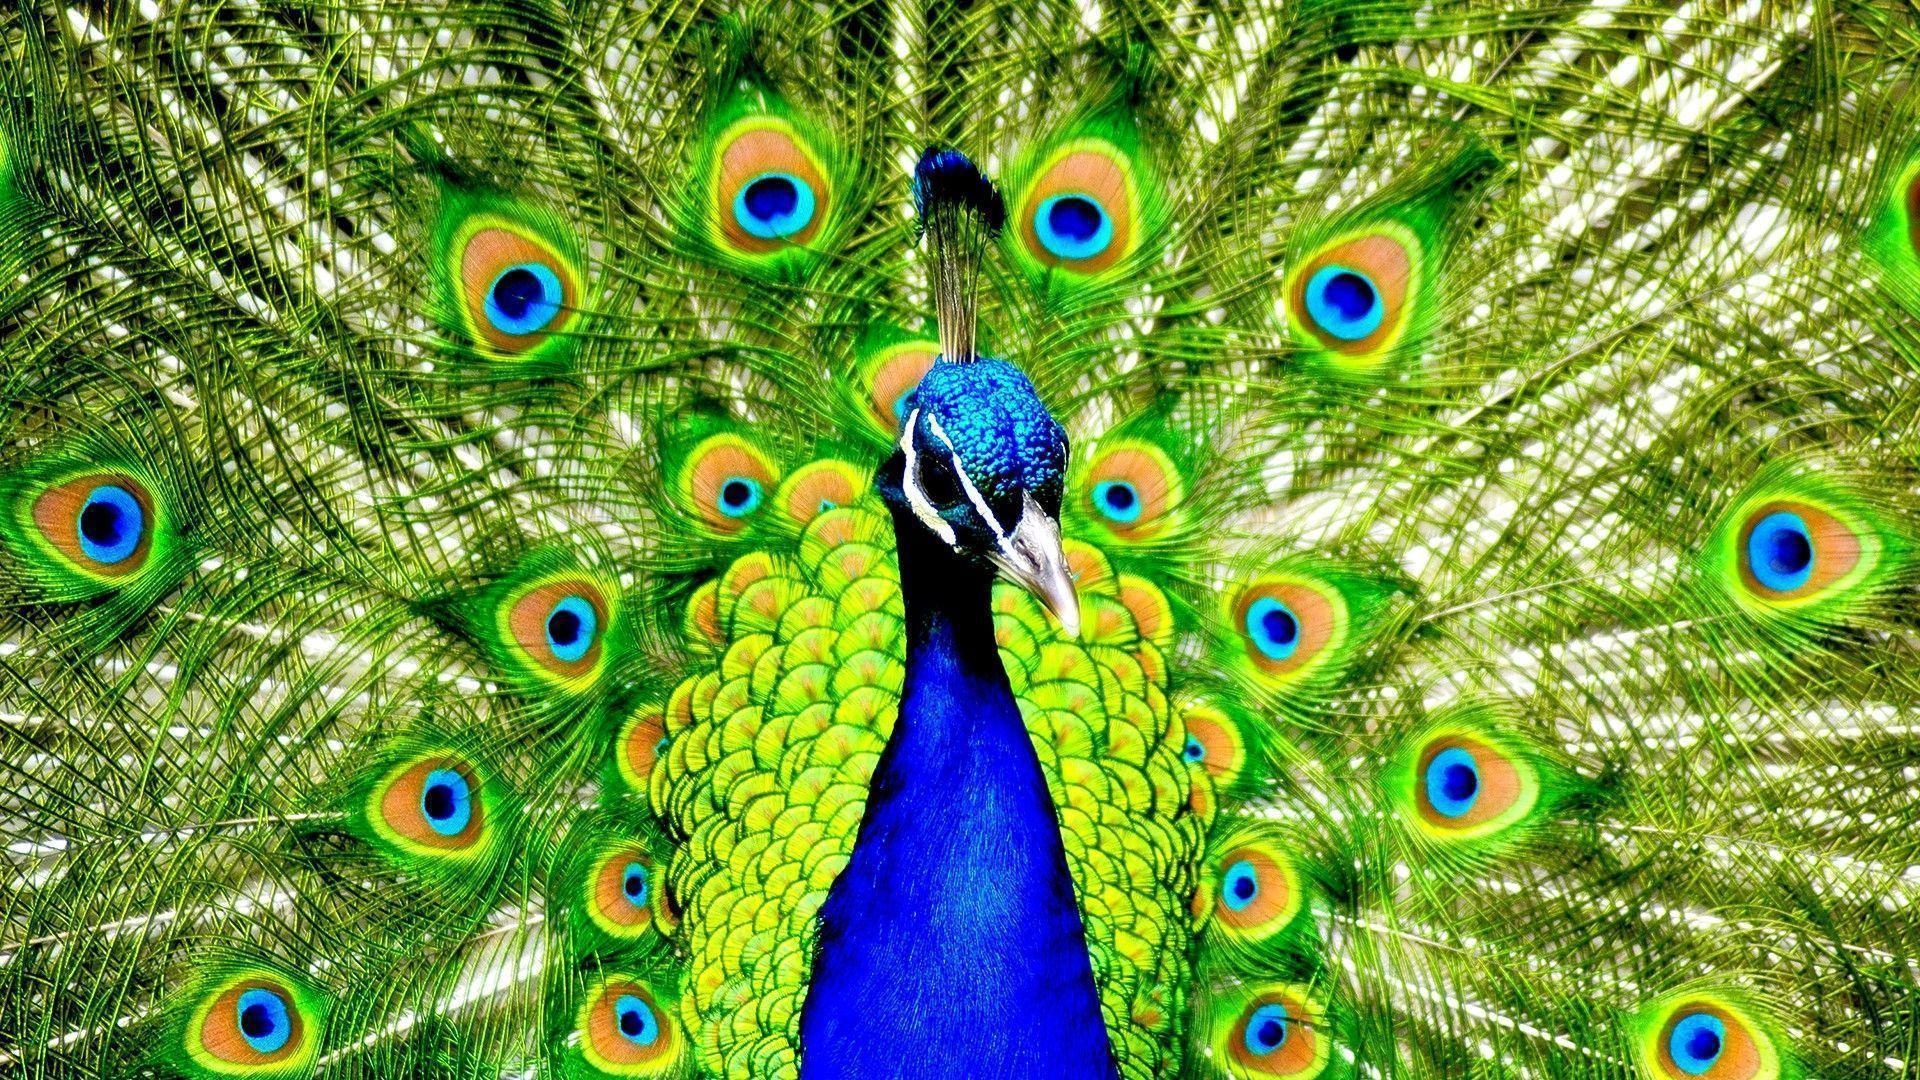 Peacock Wallpaper HD. Wallpaper, Background, Image, Art Photo